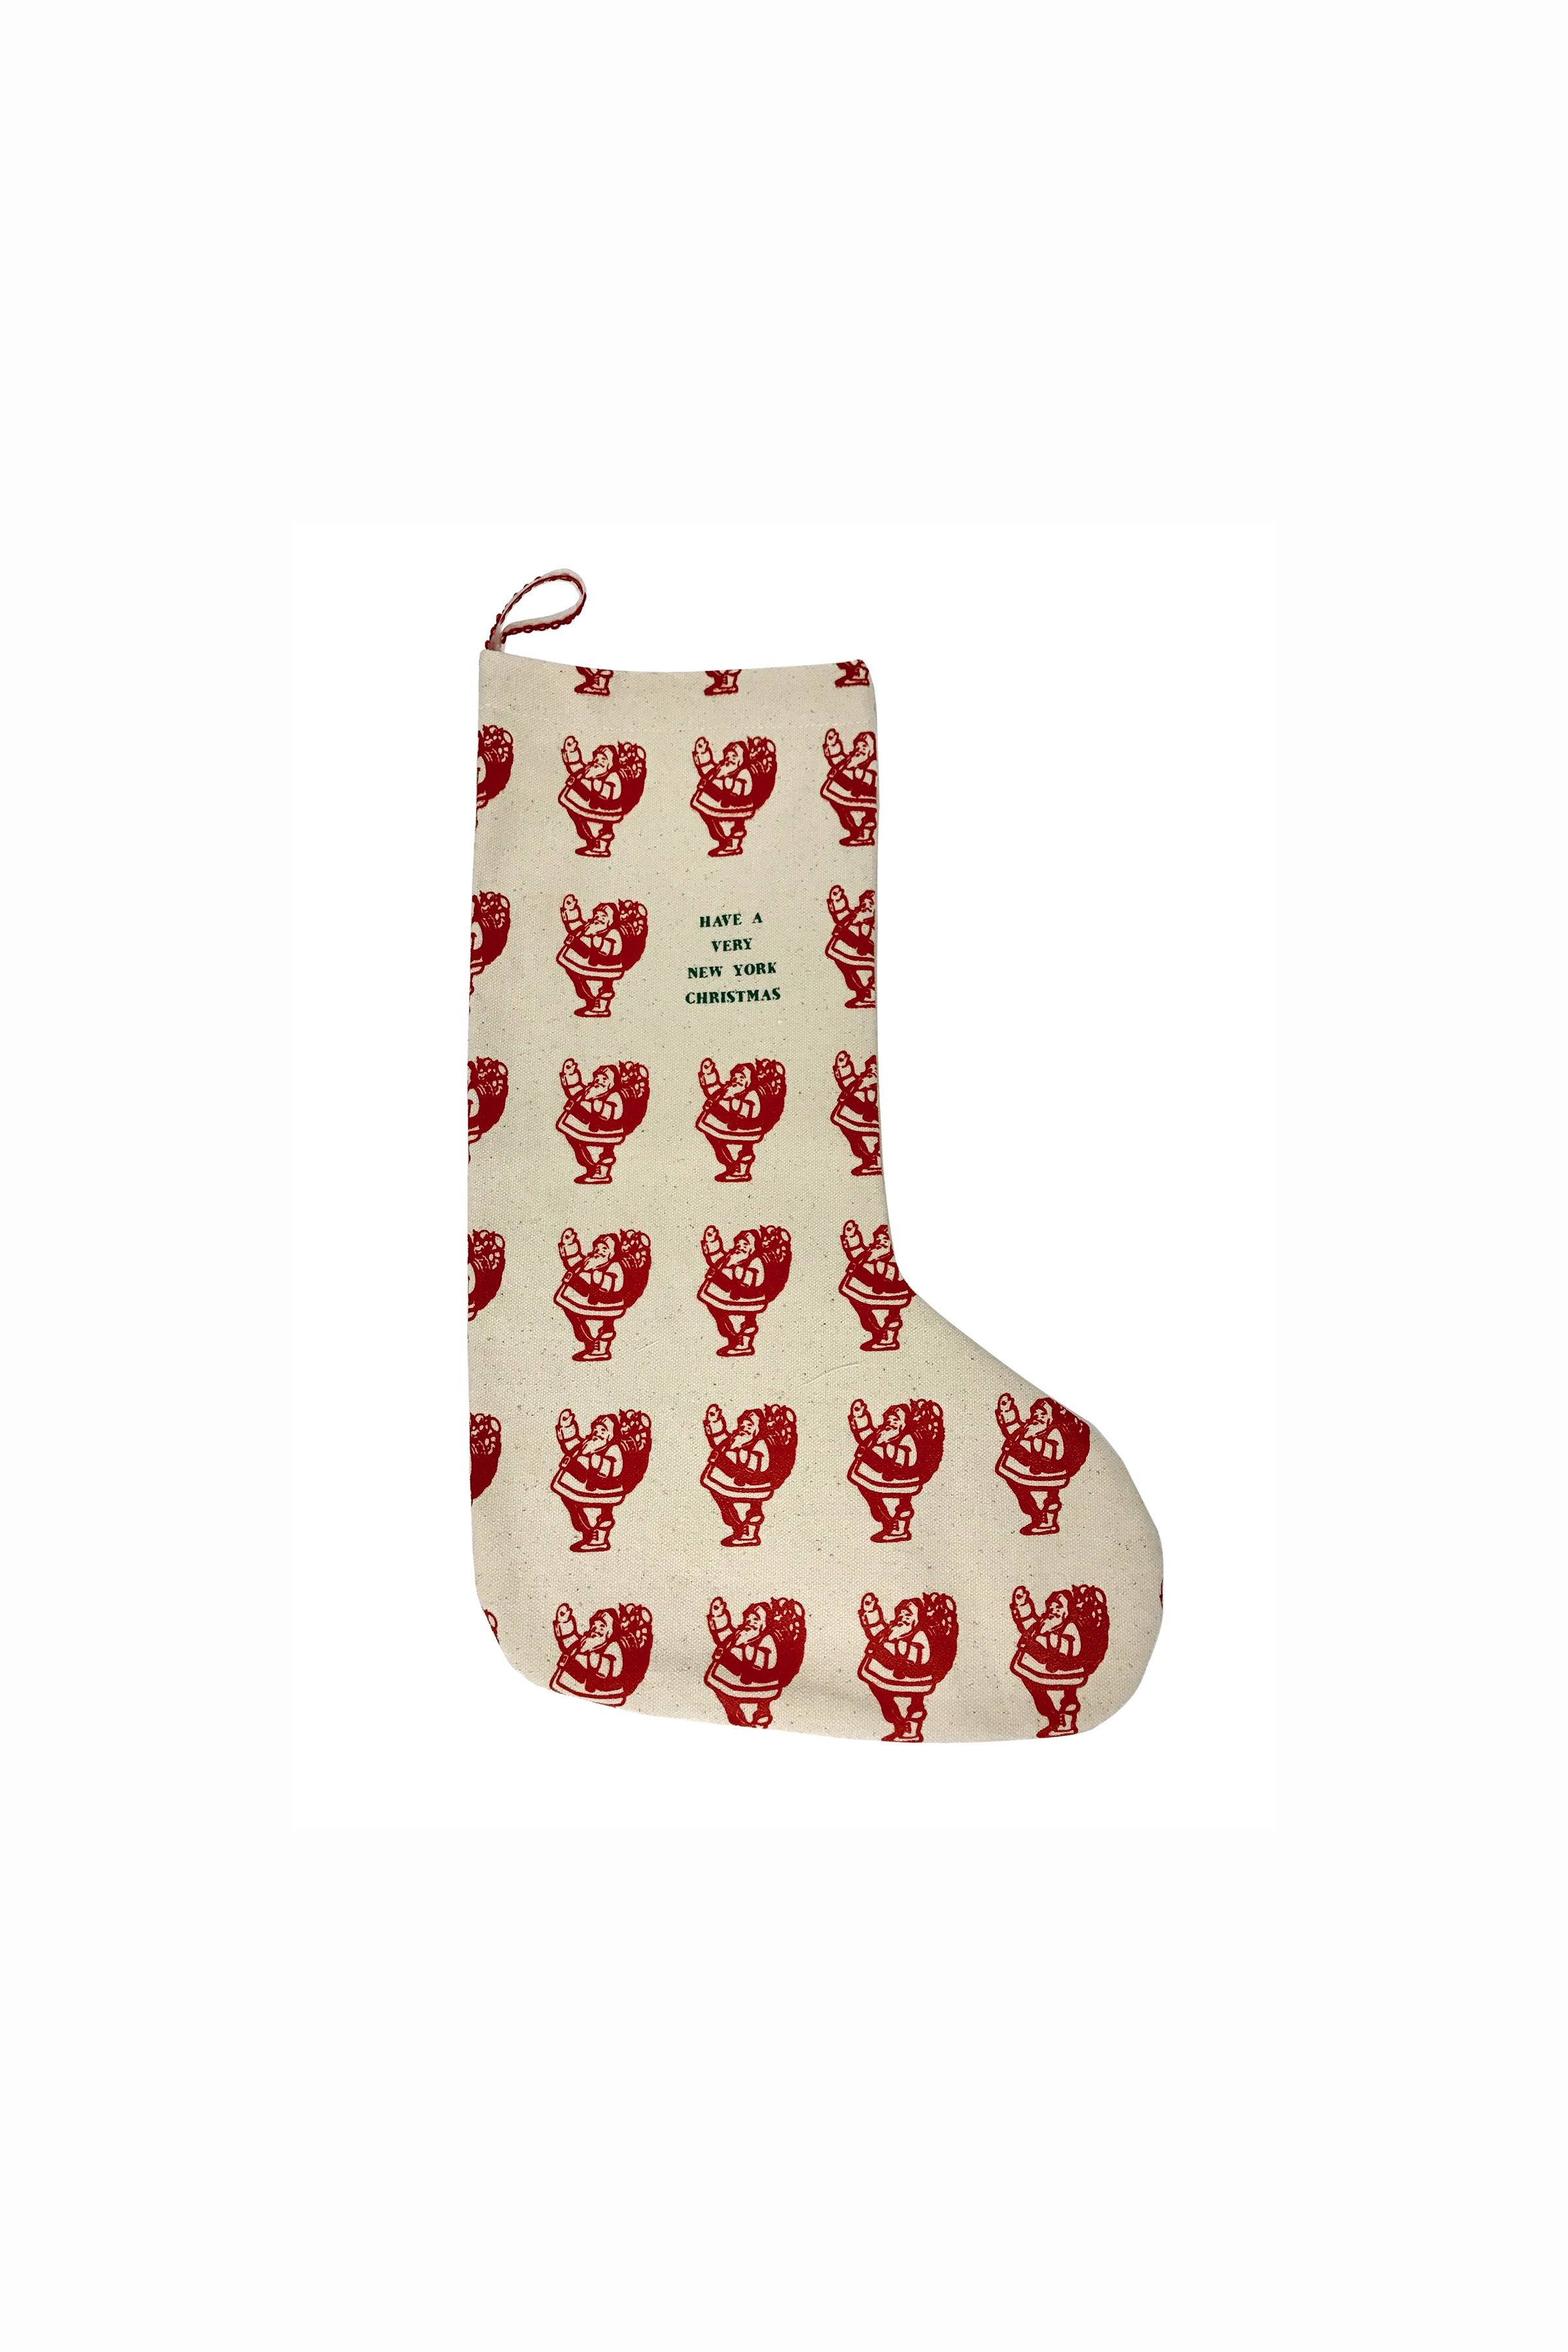 have a New York Christmas stocking | pamela barsky